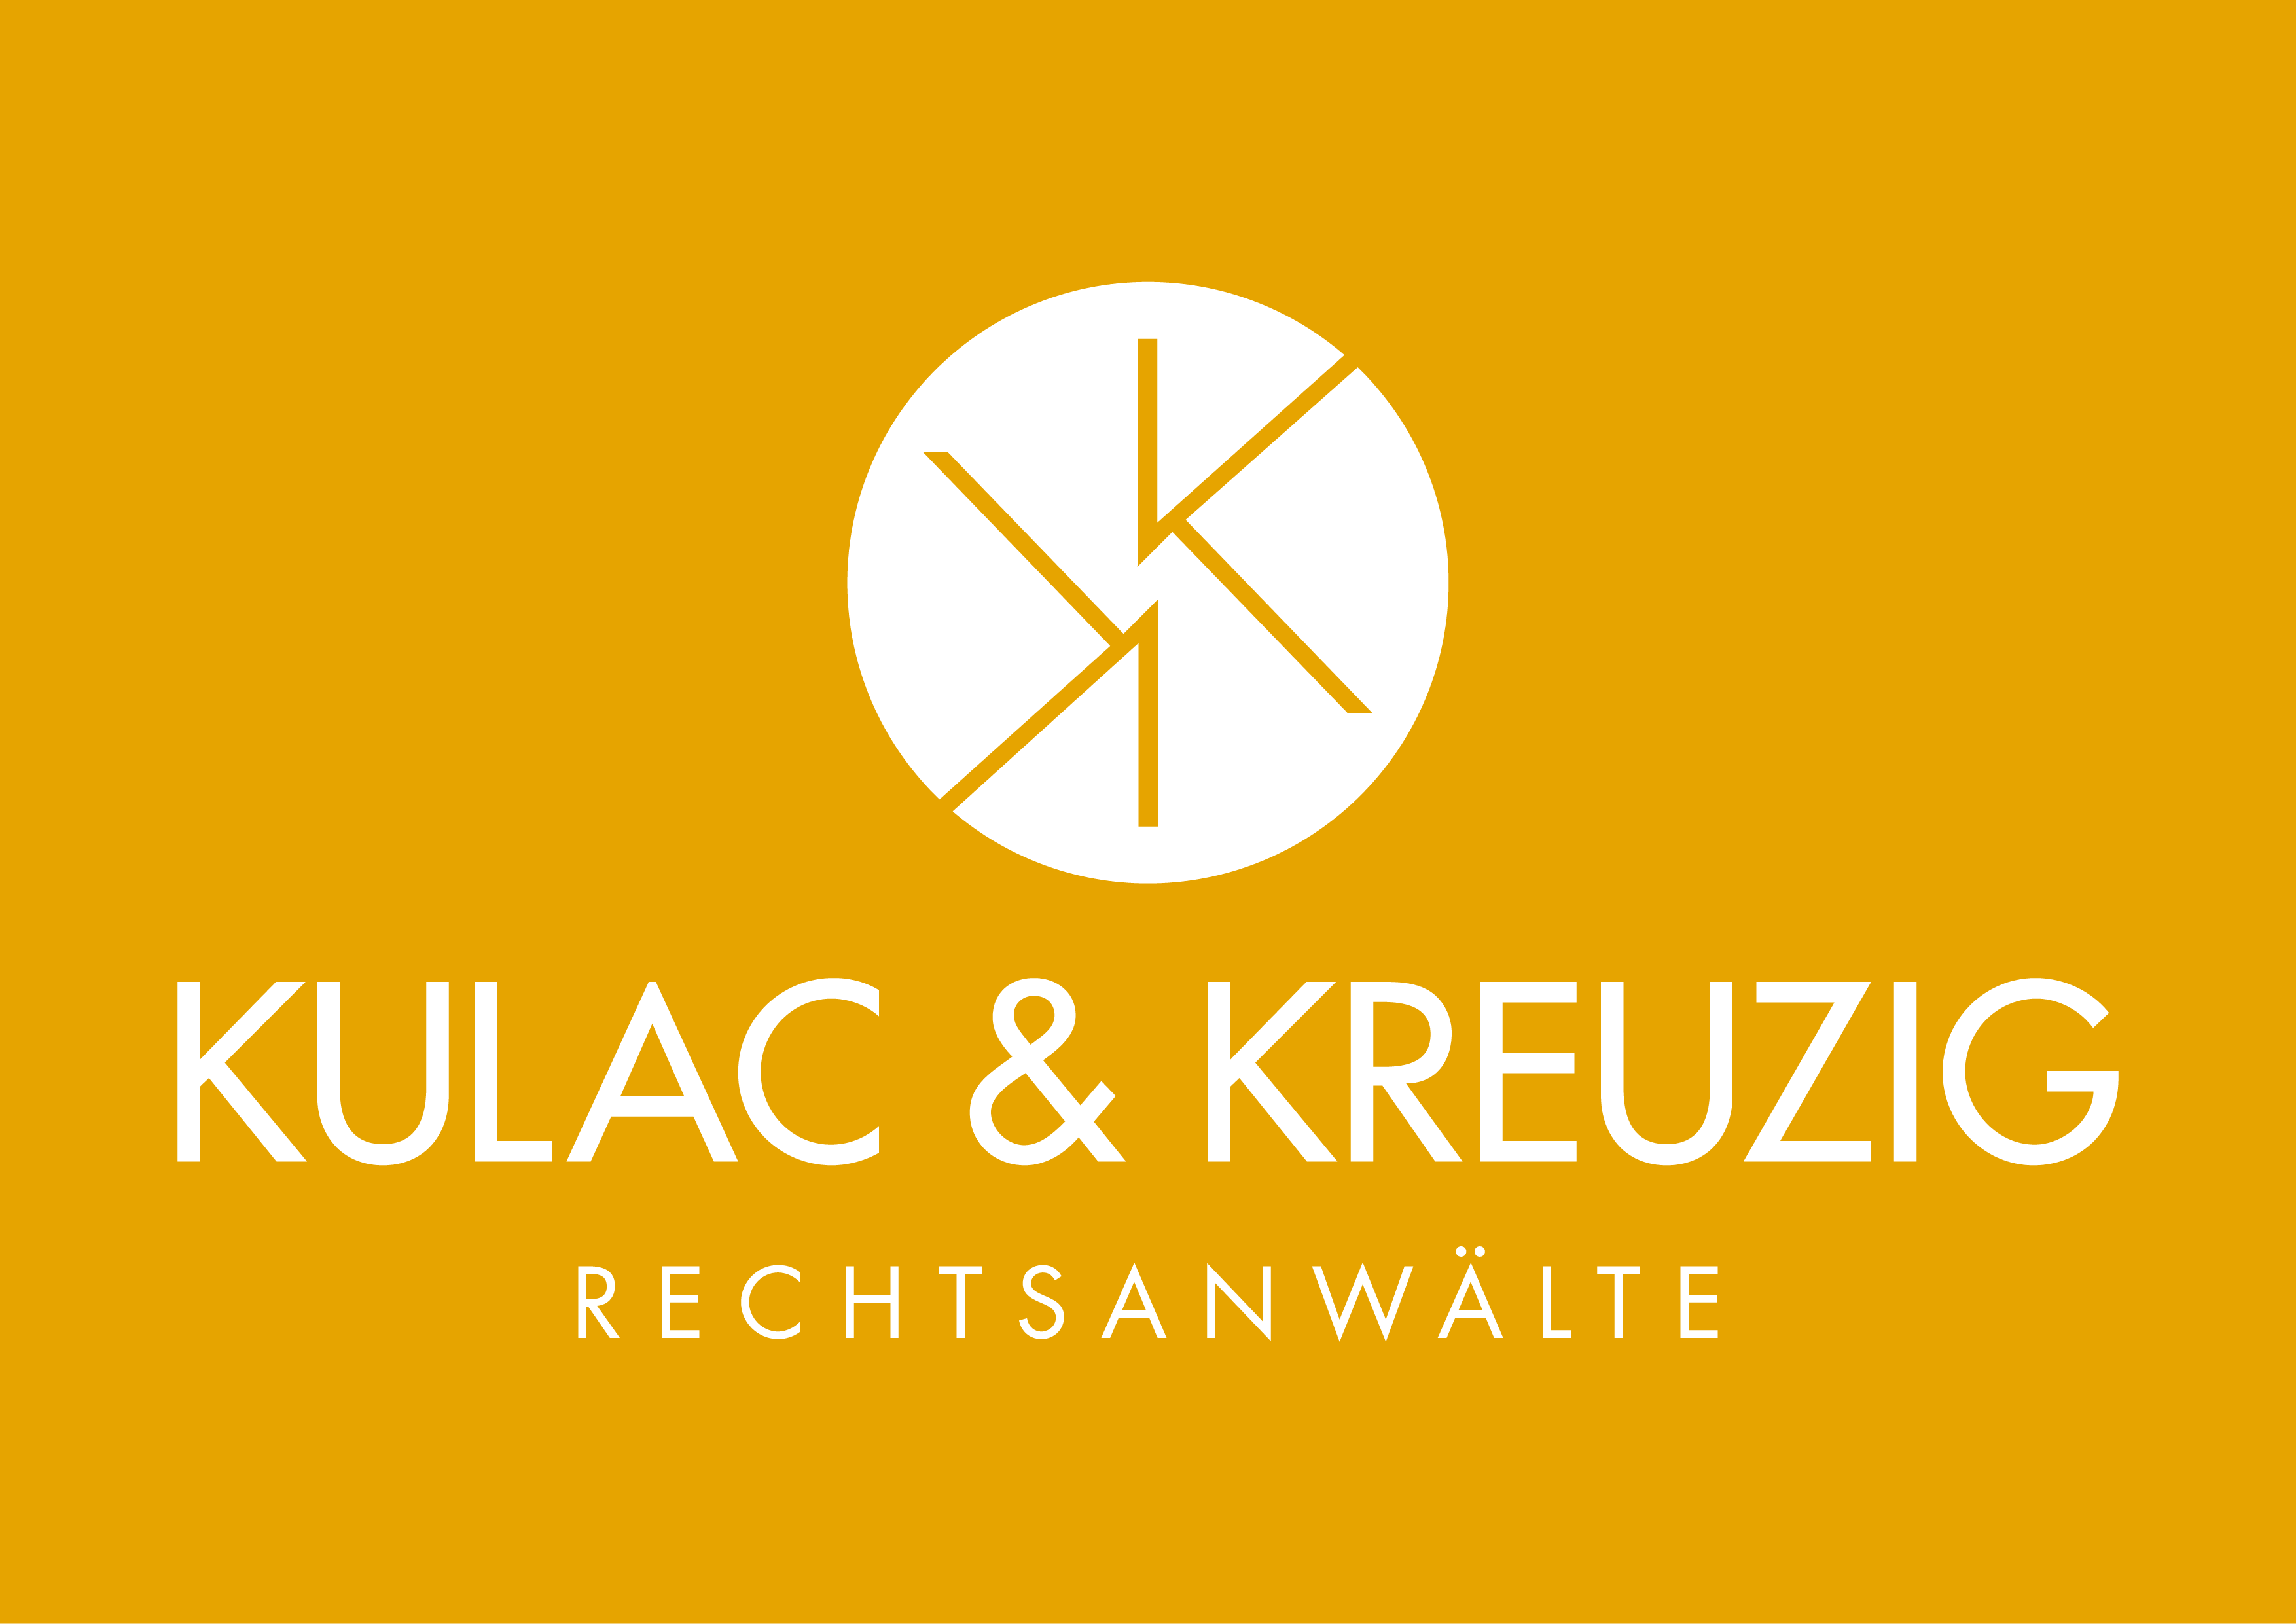 Kulac & Kreuzig